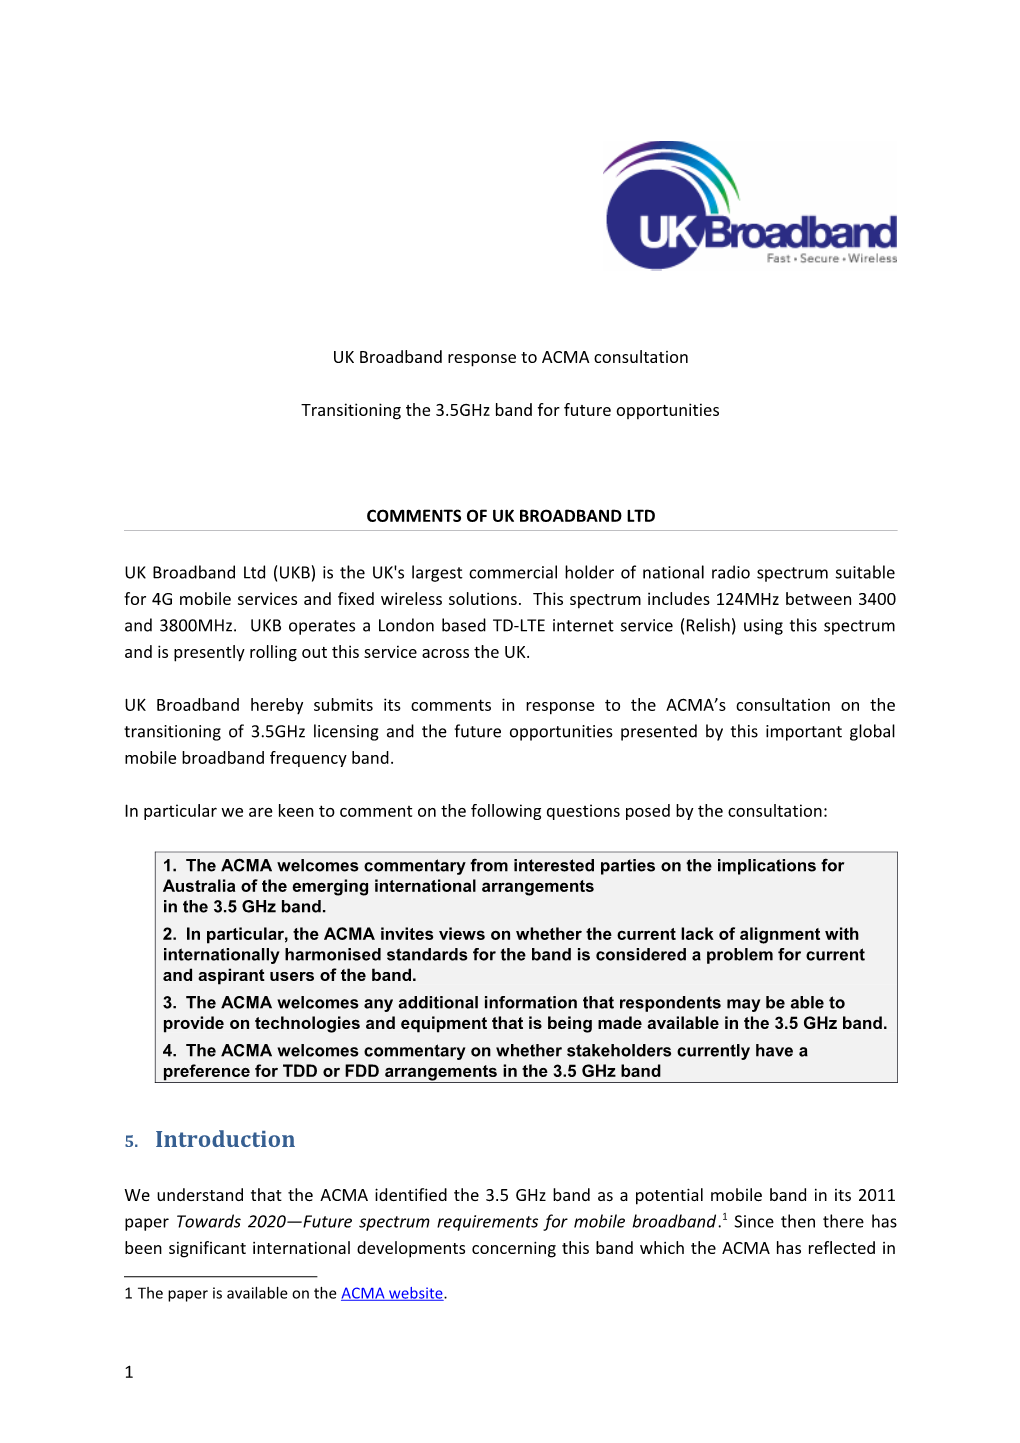 UK Broadband Response to ACMA Consultation